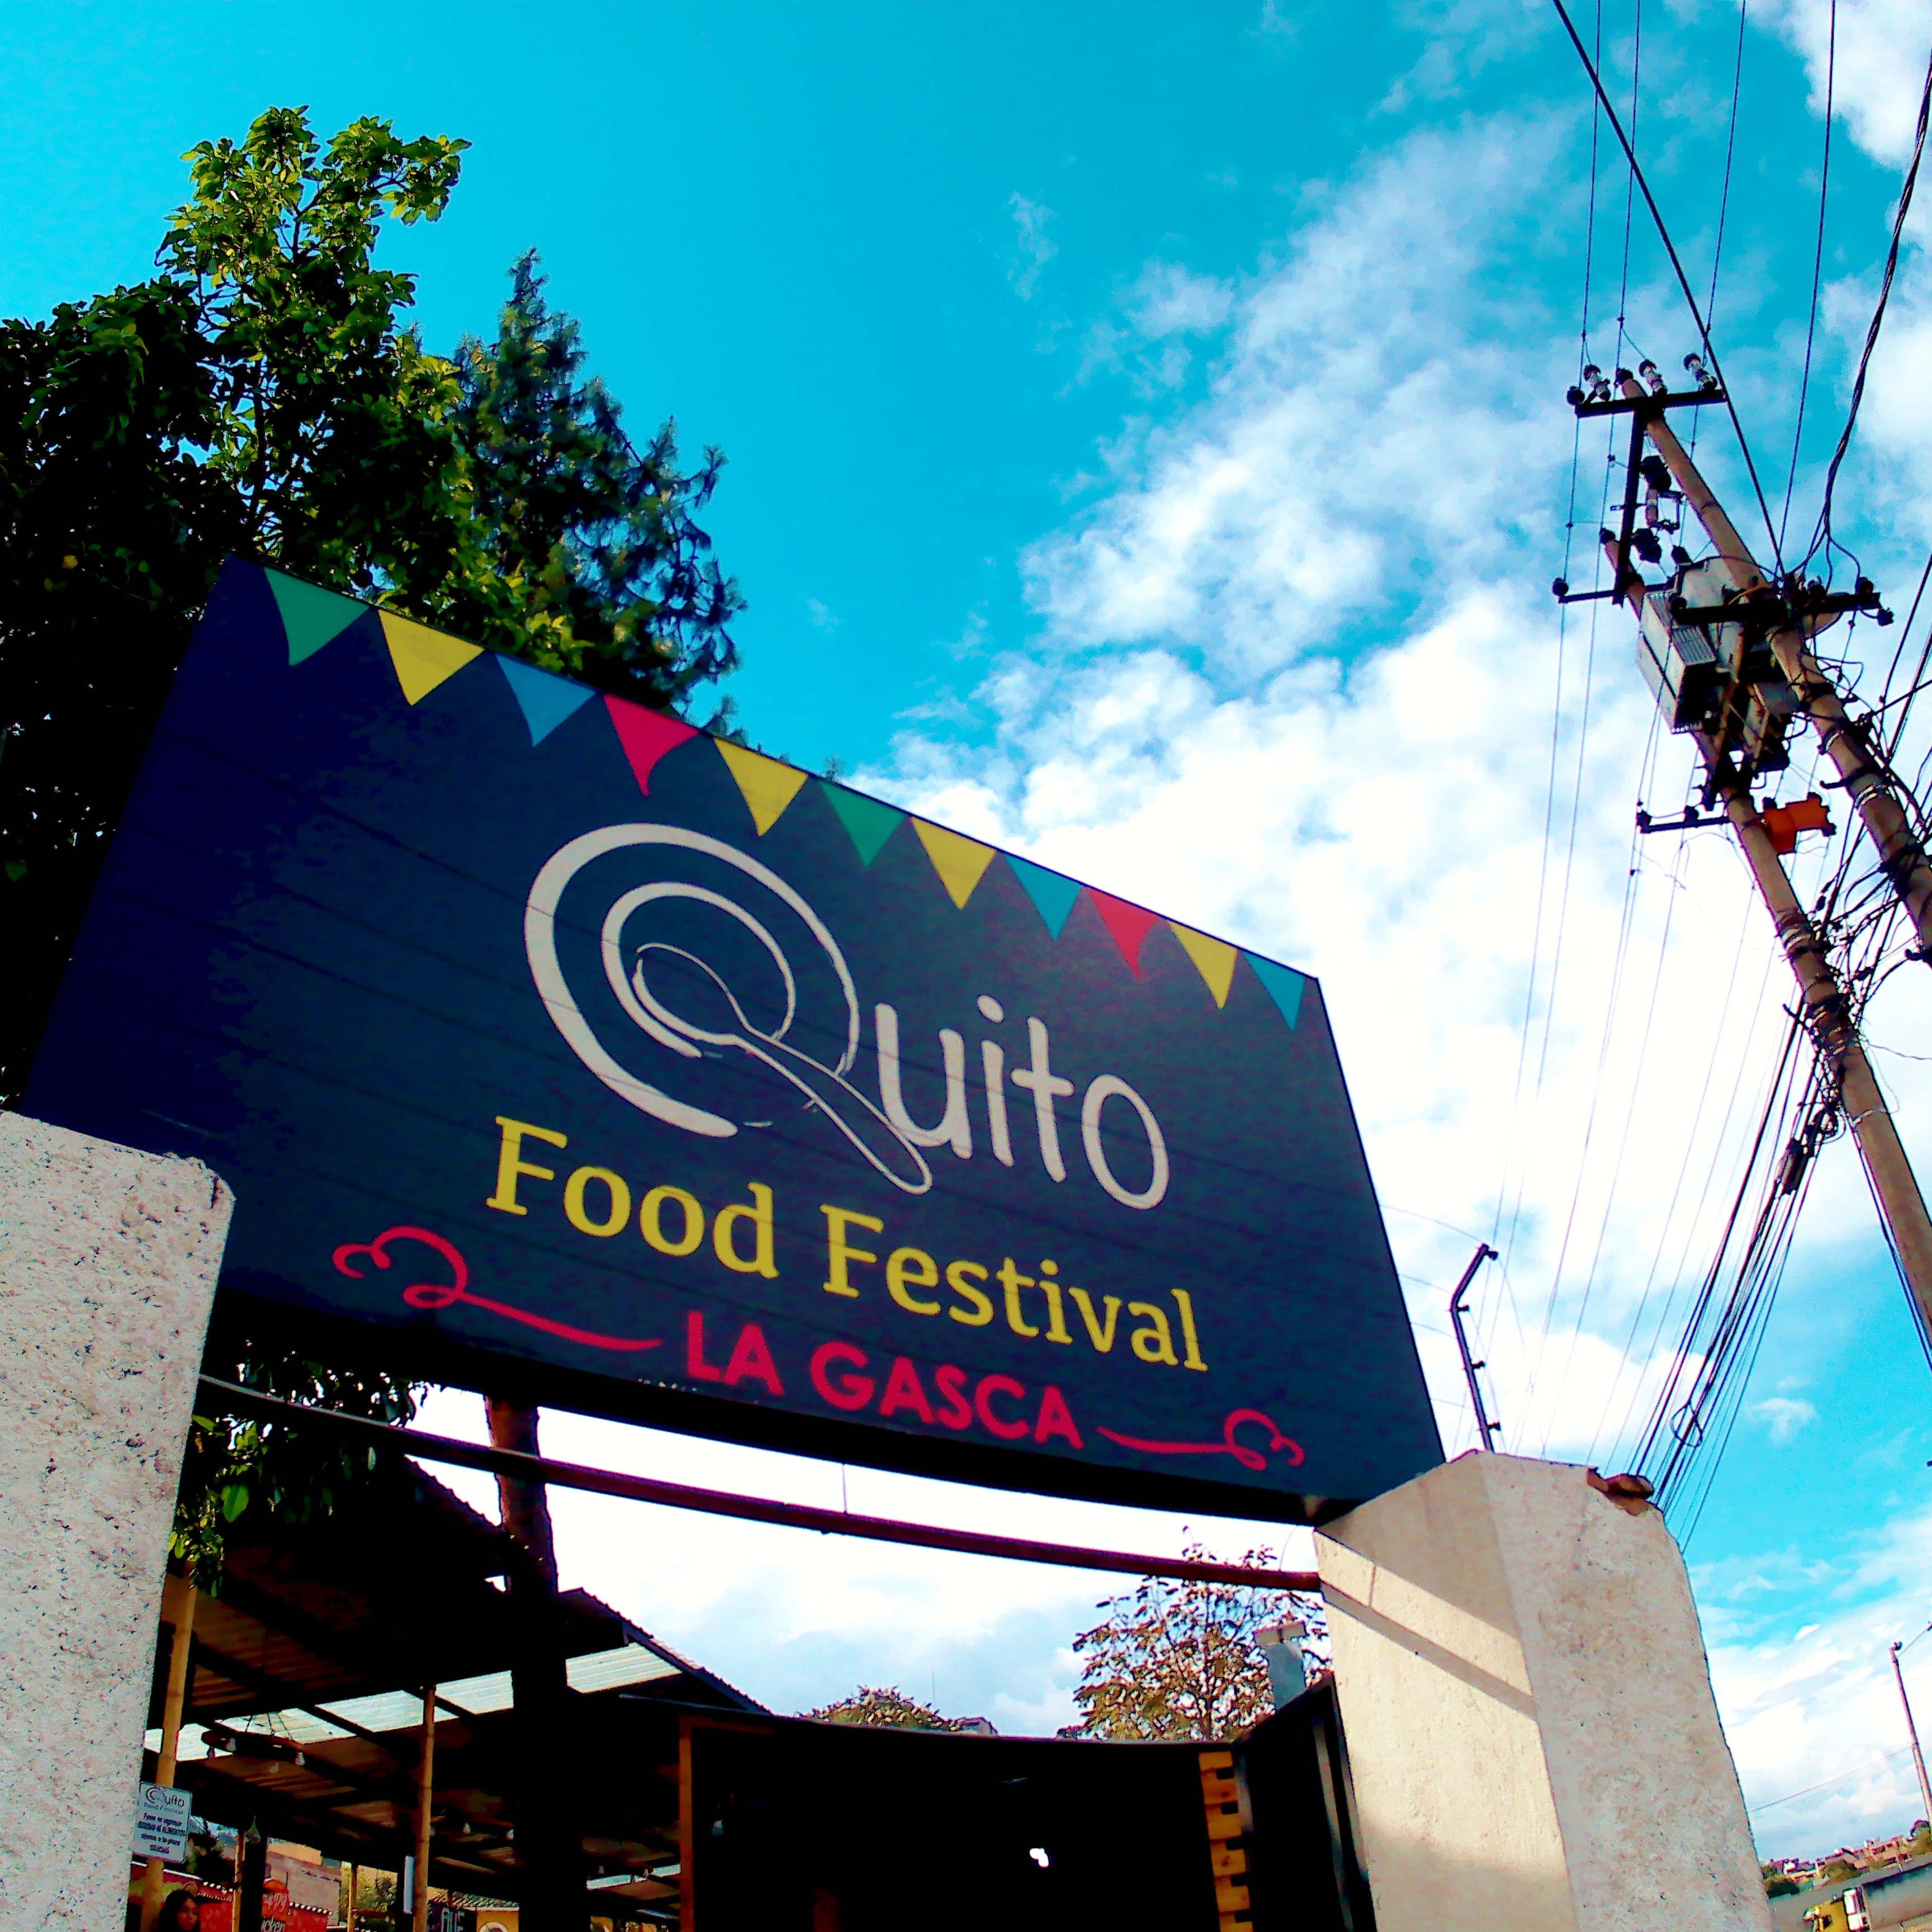 quito food festival la gasca ecuador